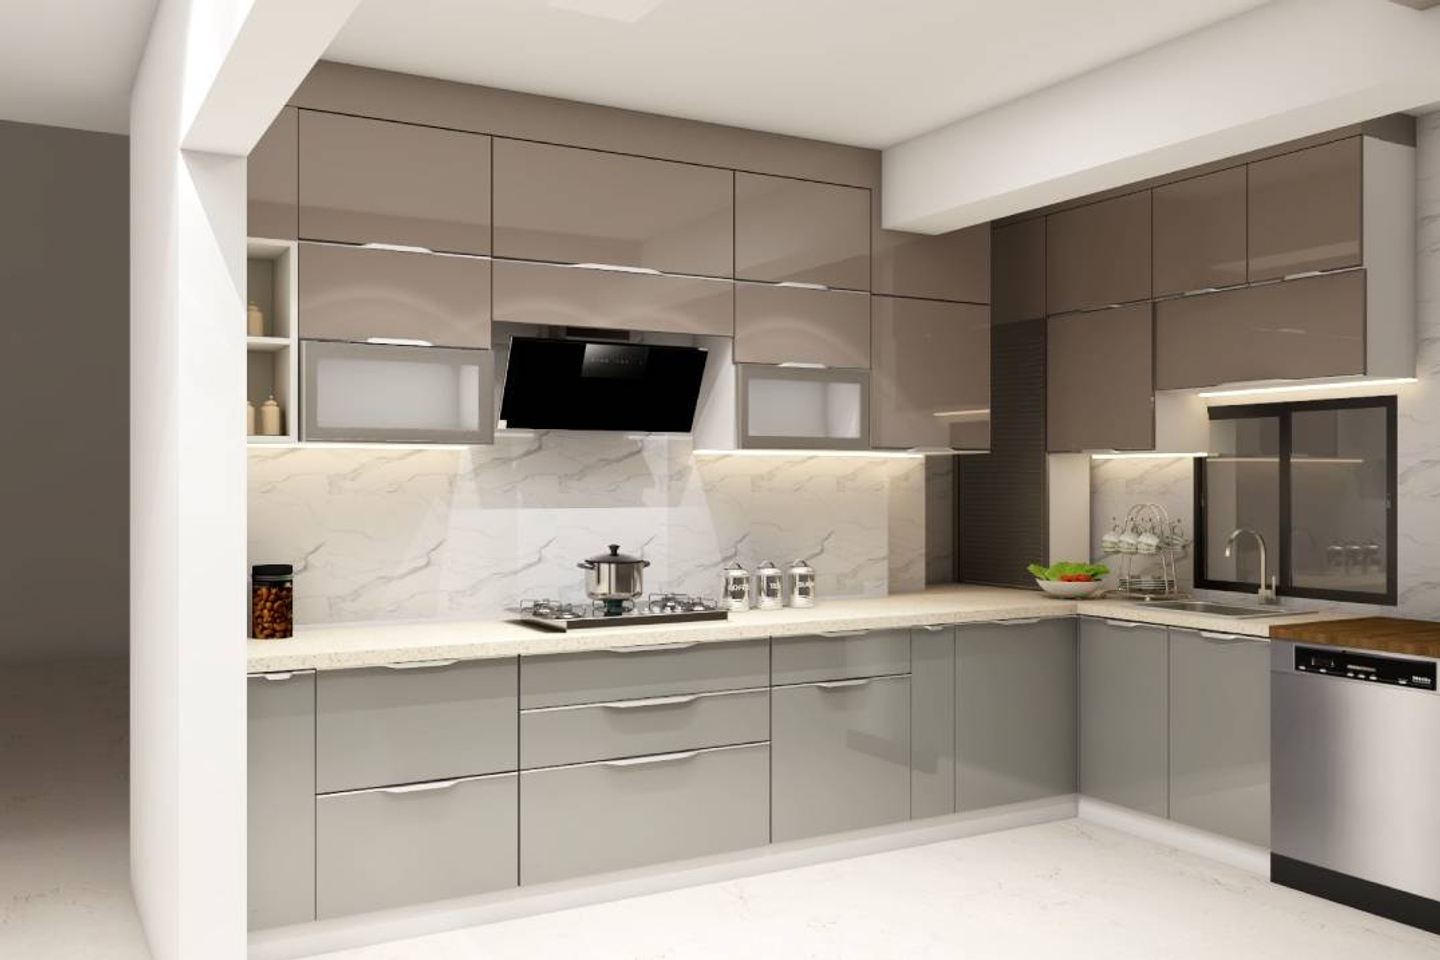 Modern L-Shaped Kitchen Design With High-Gloss Laminates